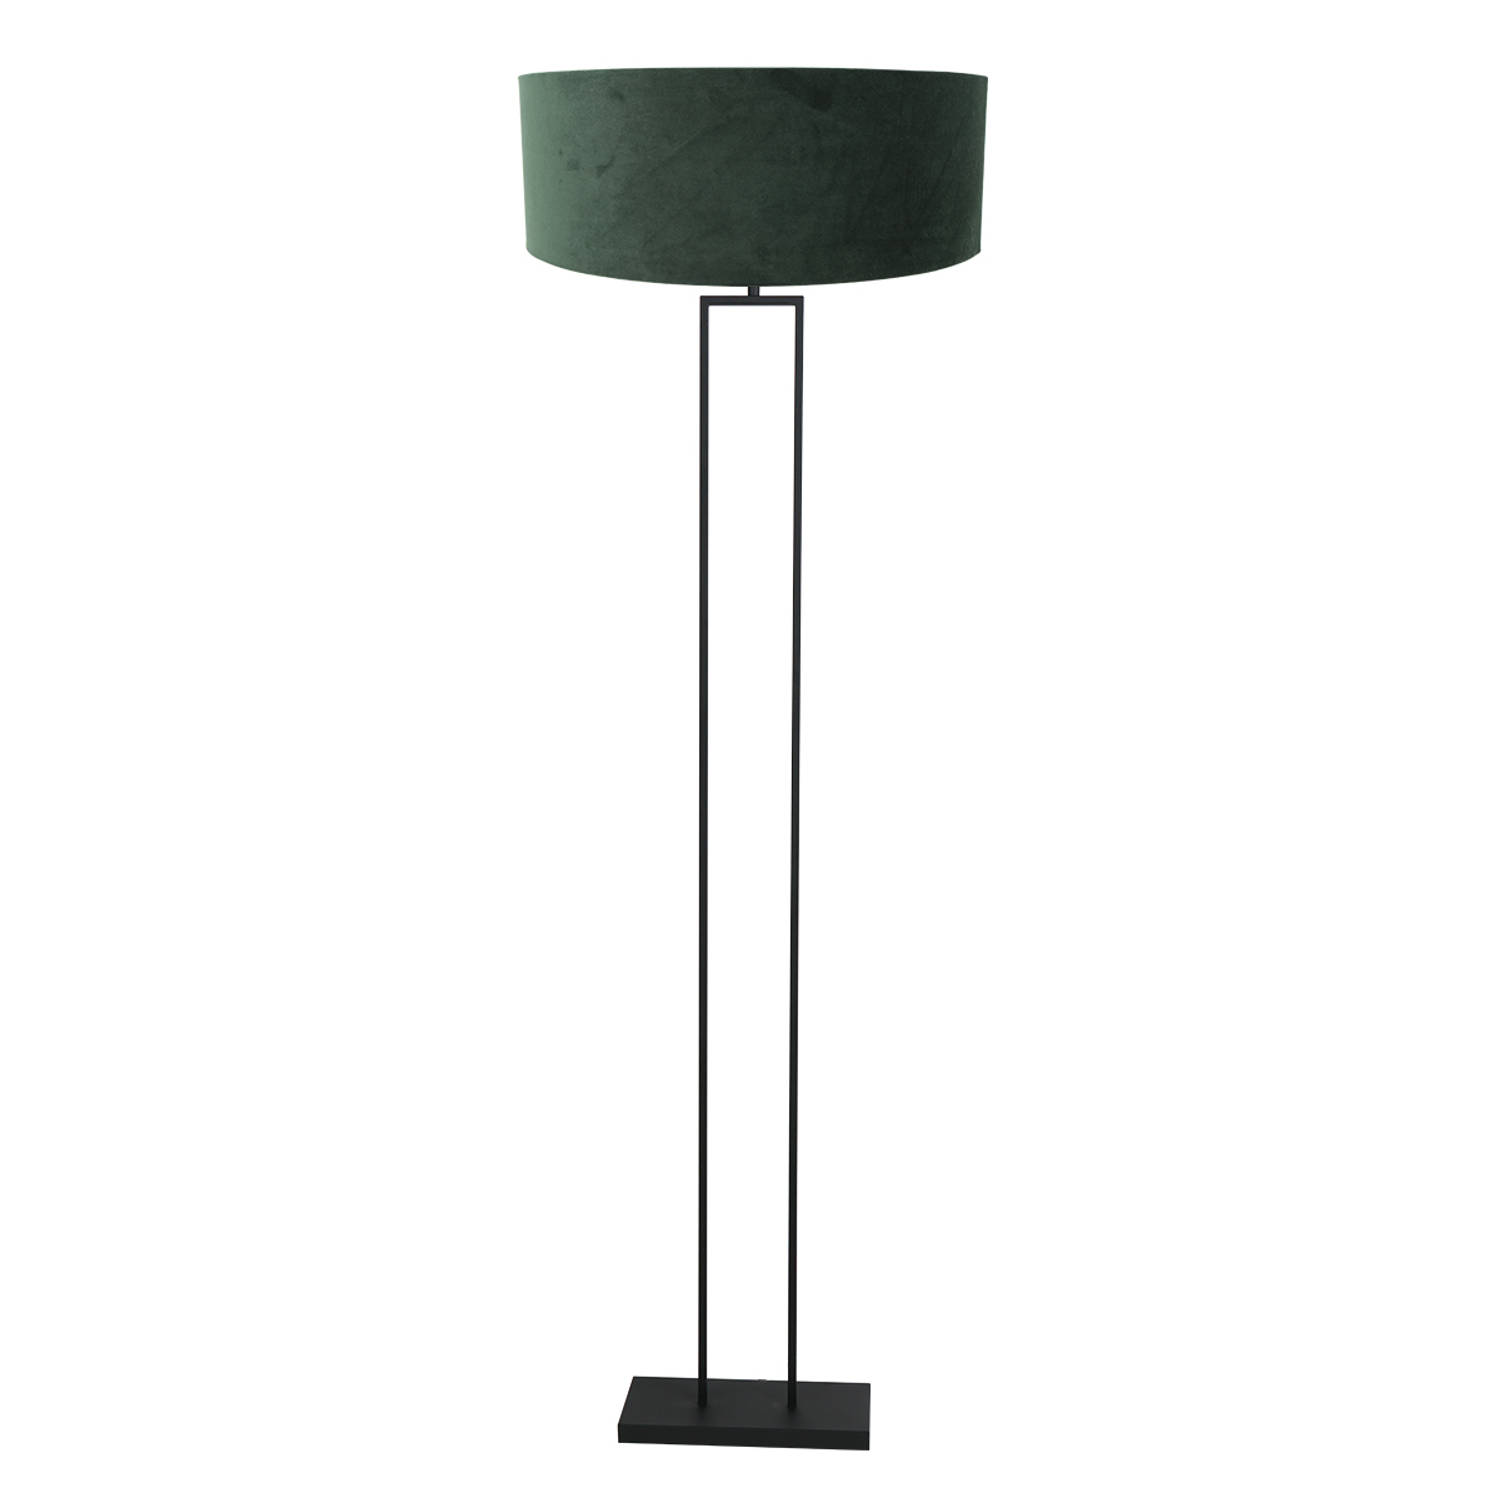 Vloerlamp Stang | 1-lichts | groen / zwart | E27 fitting | modern / design | woonkamer / slaapkamer | Ø 28x140 cm